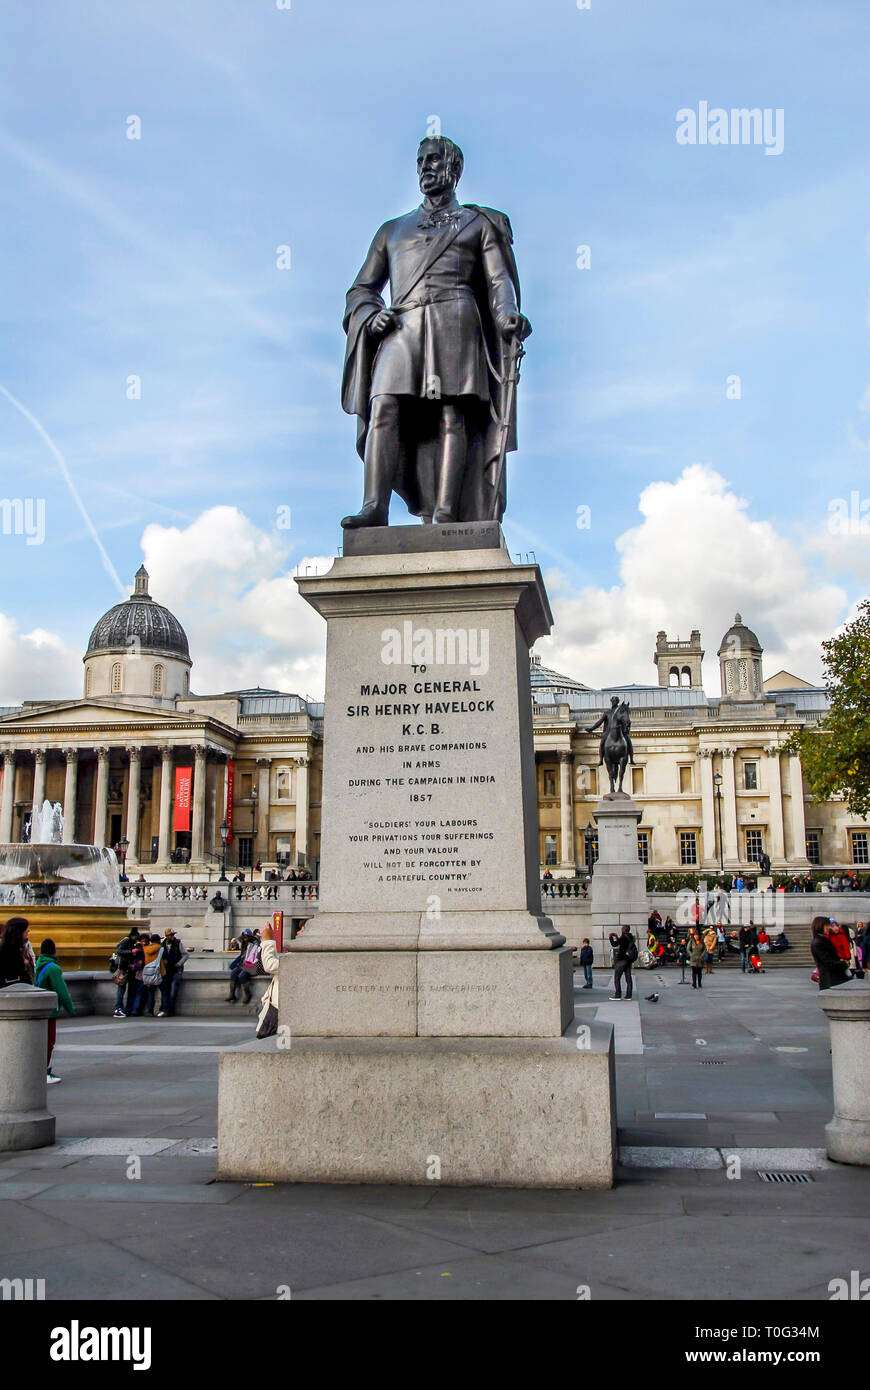 London, UK, 30. Oktober 2012: Statue von Sir Henry Havelock am Trafalgar Square Stockfoto